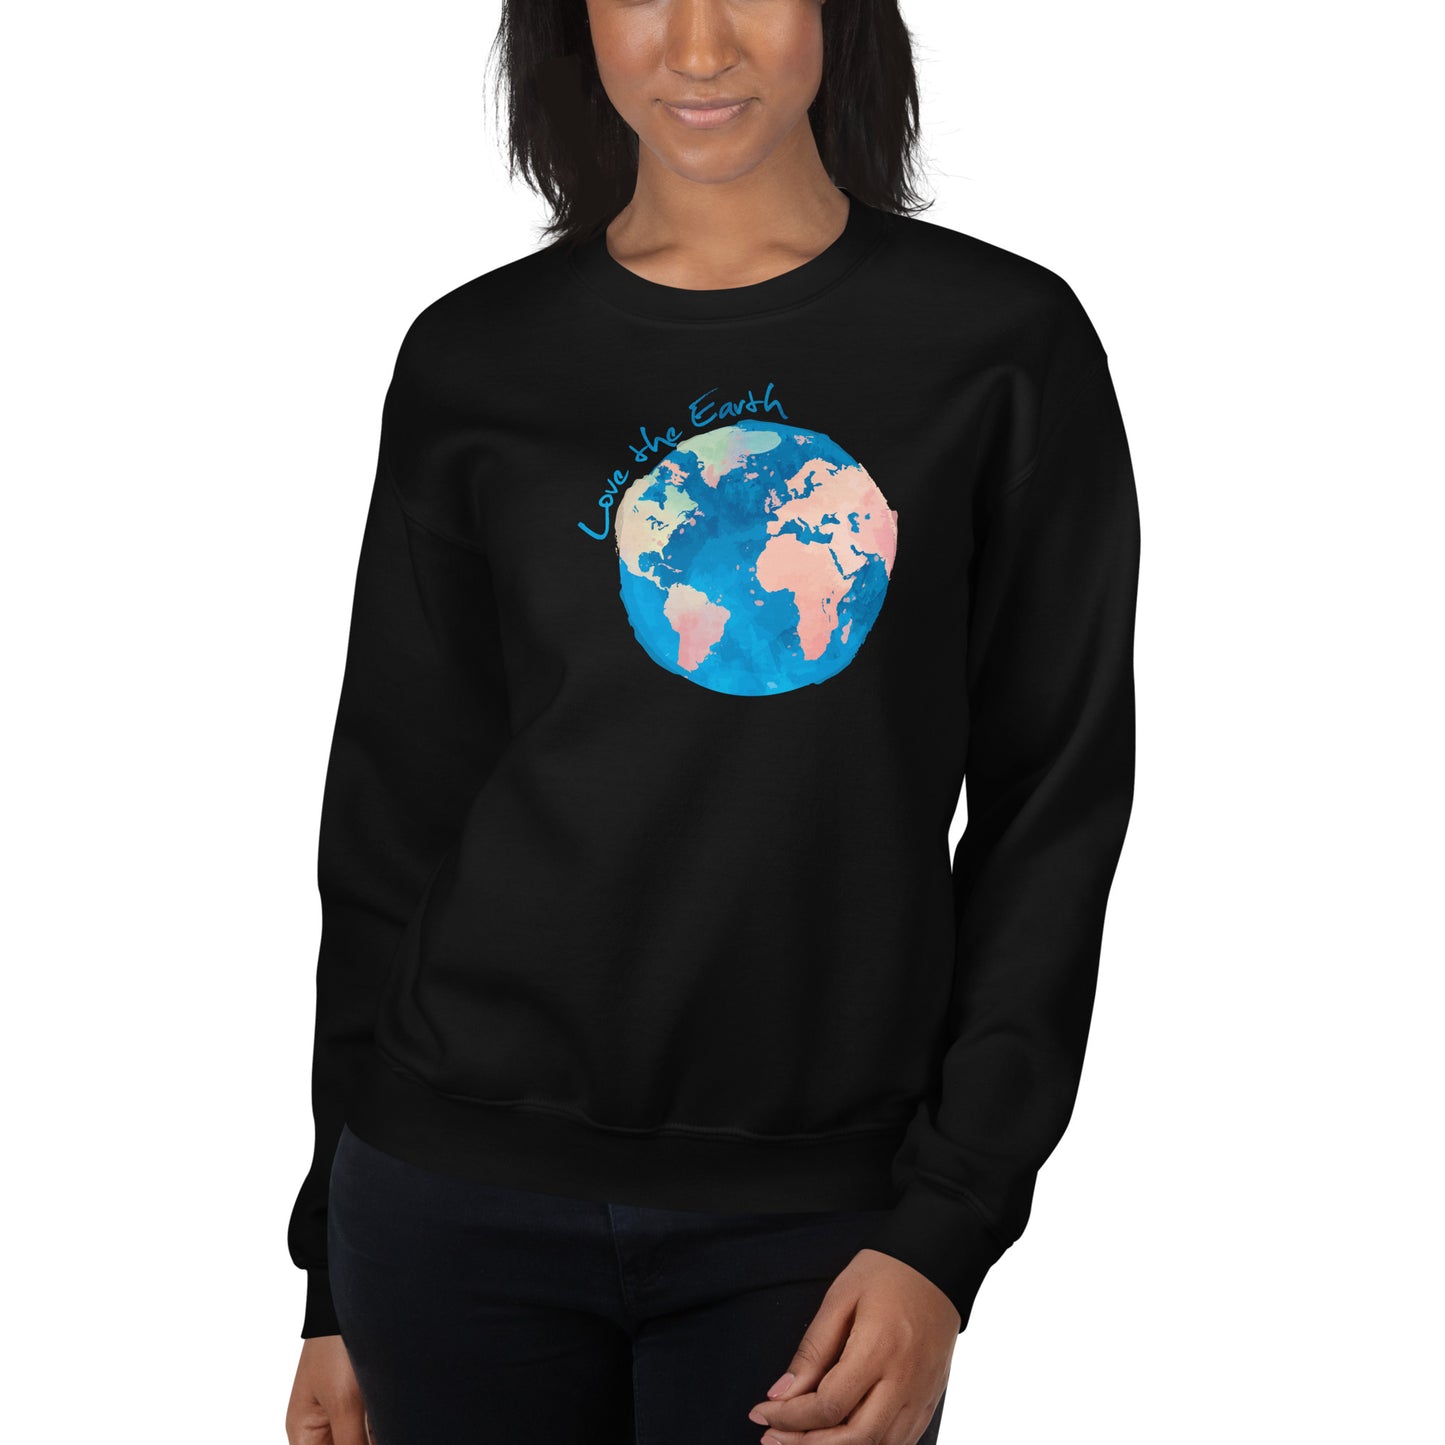 Love the Earth Crewneck Sweatshirt